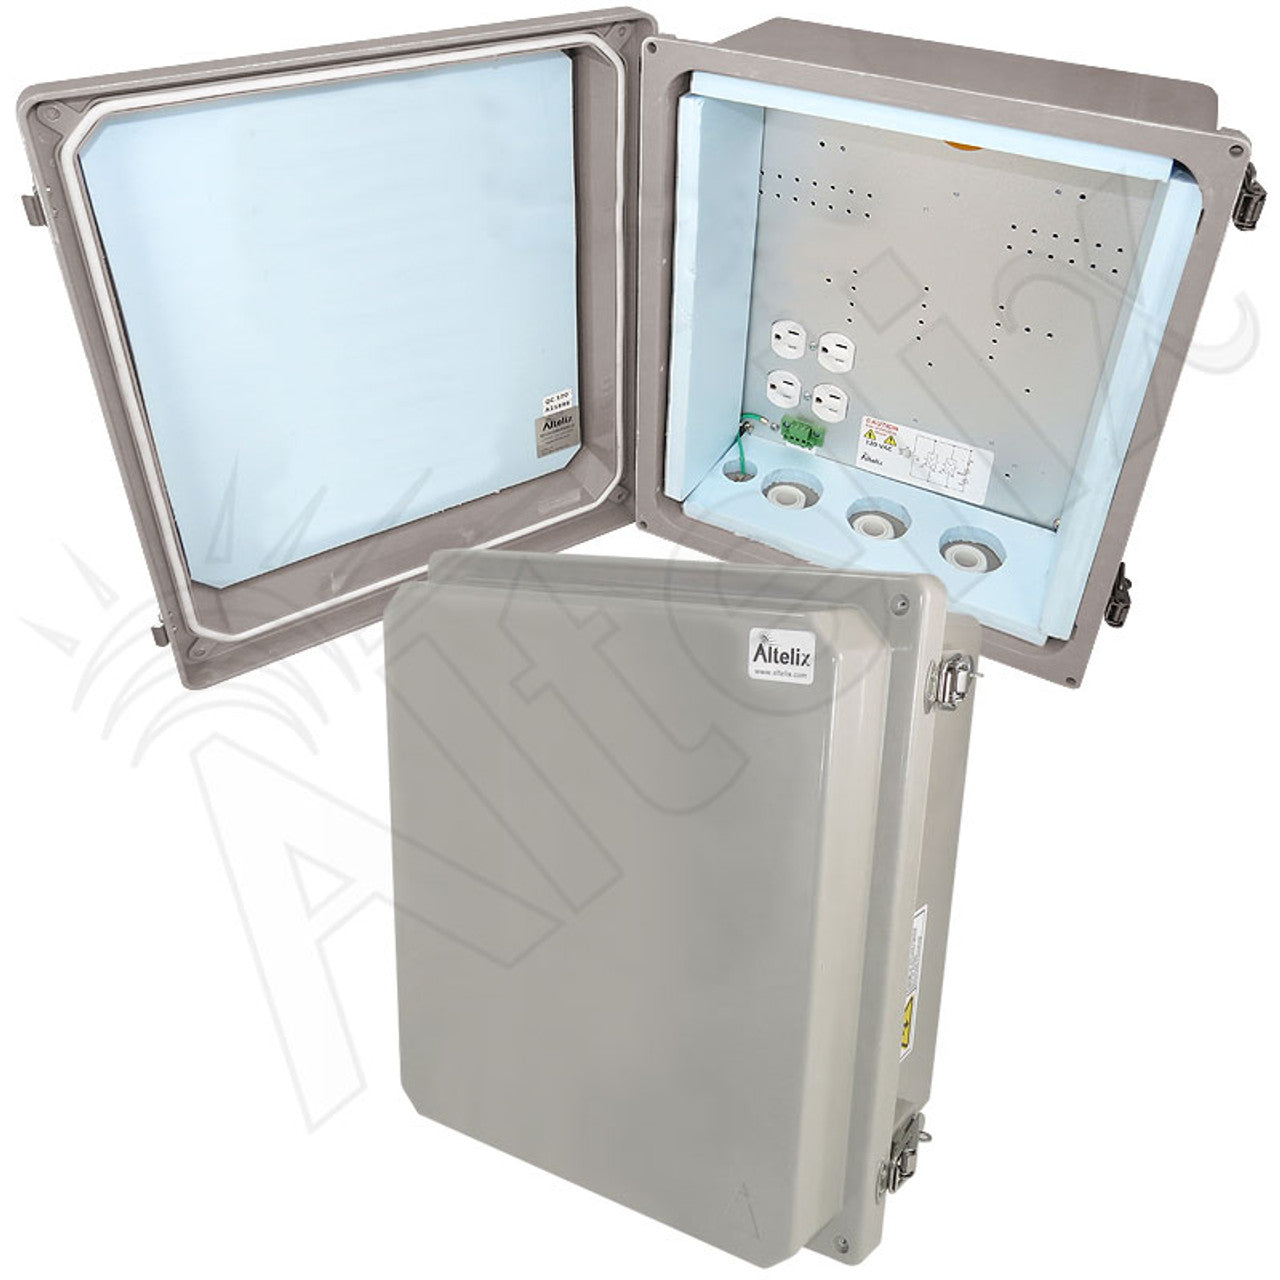 Altelix Insulated Fiberglass Weatherproof NEMA 4X Enclosure with 200W Heater & 120 VAC Outlets